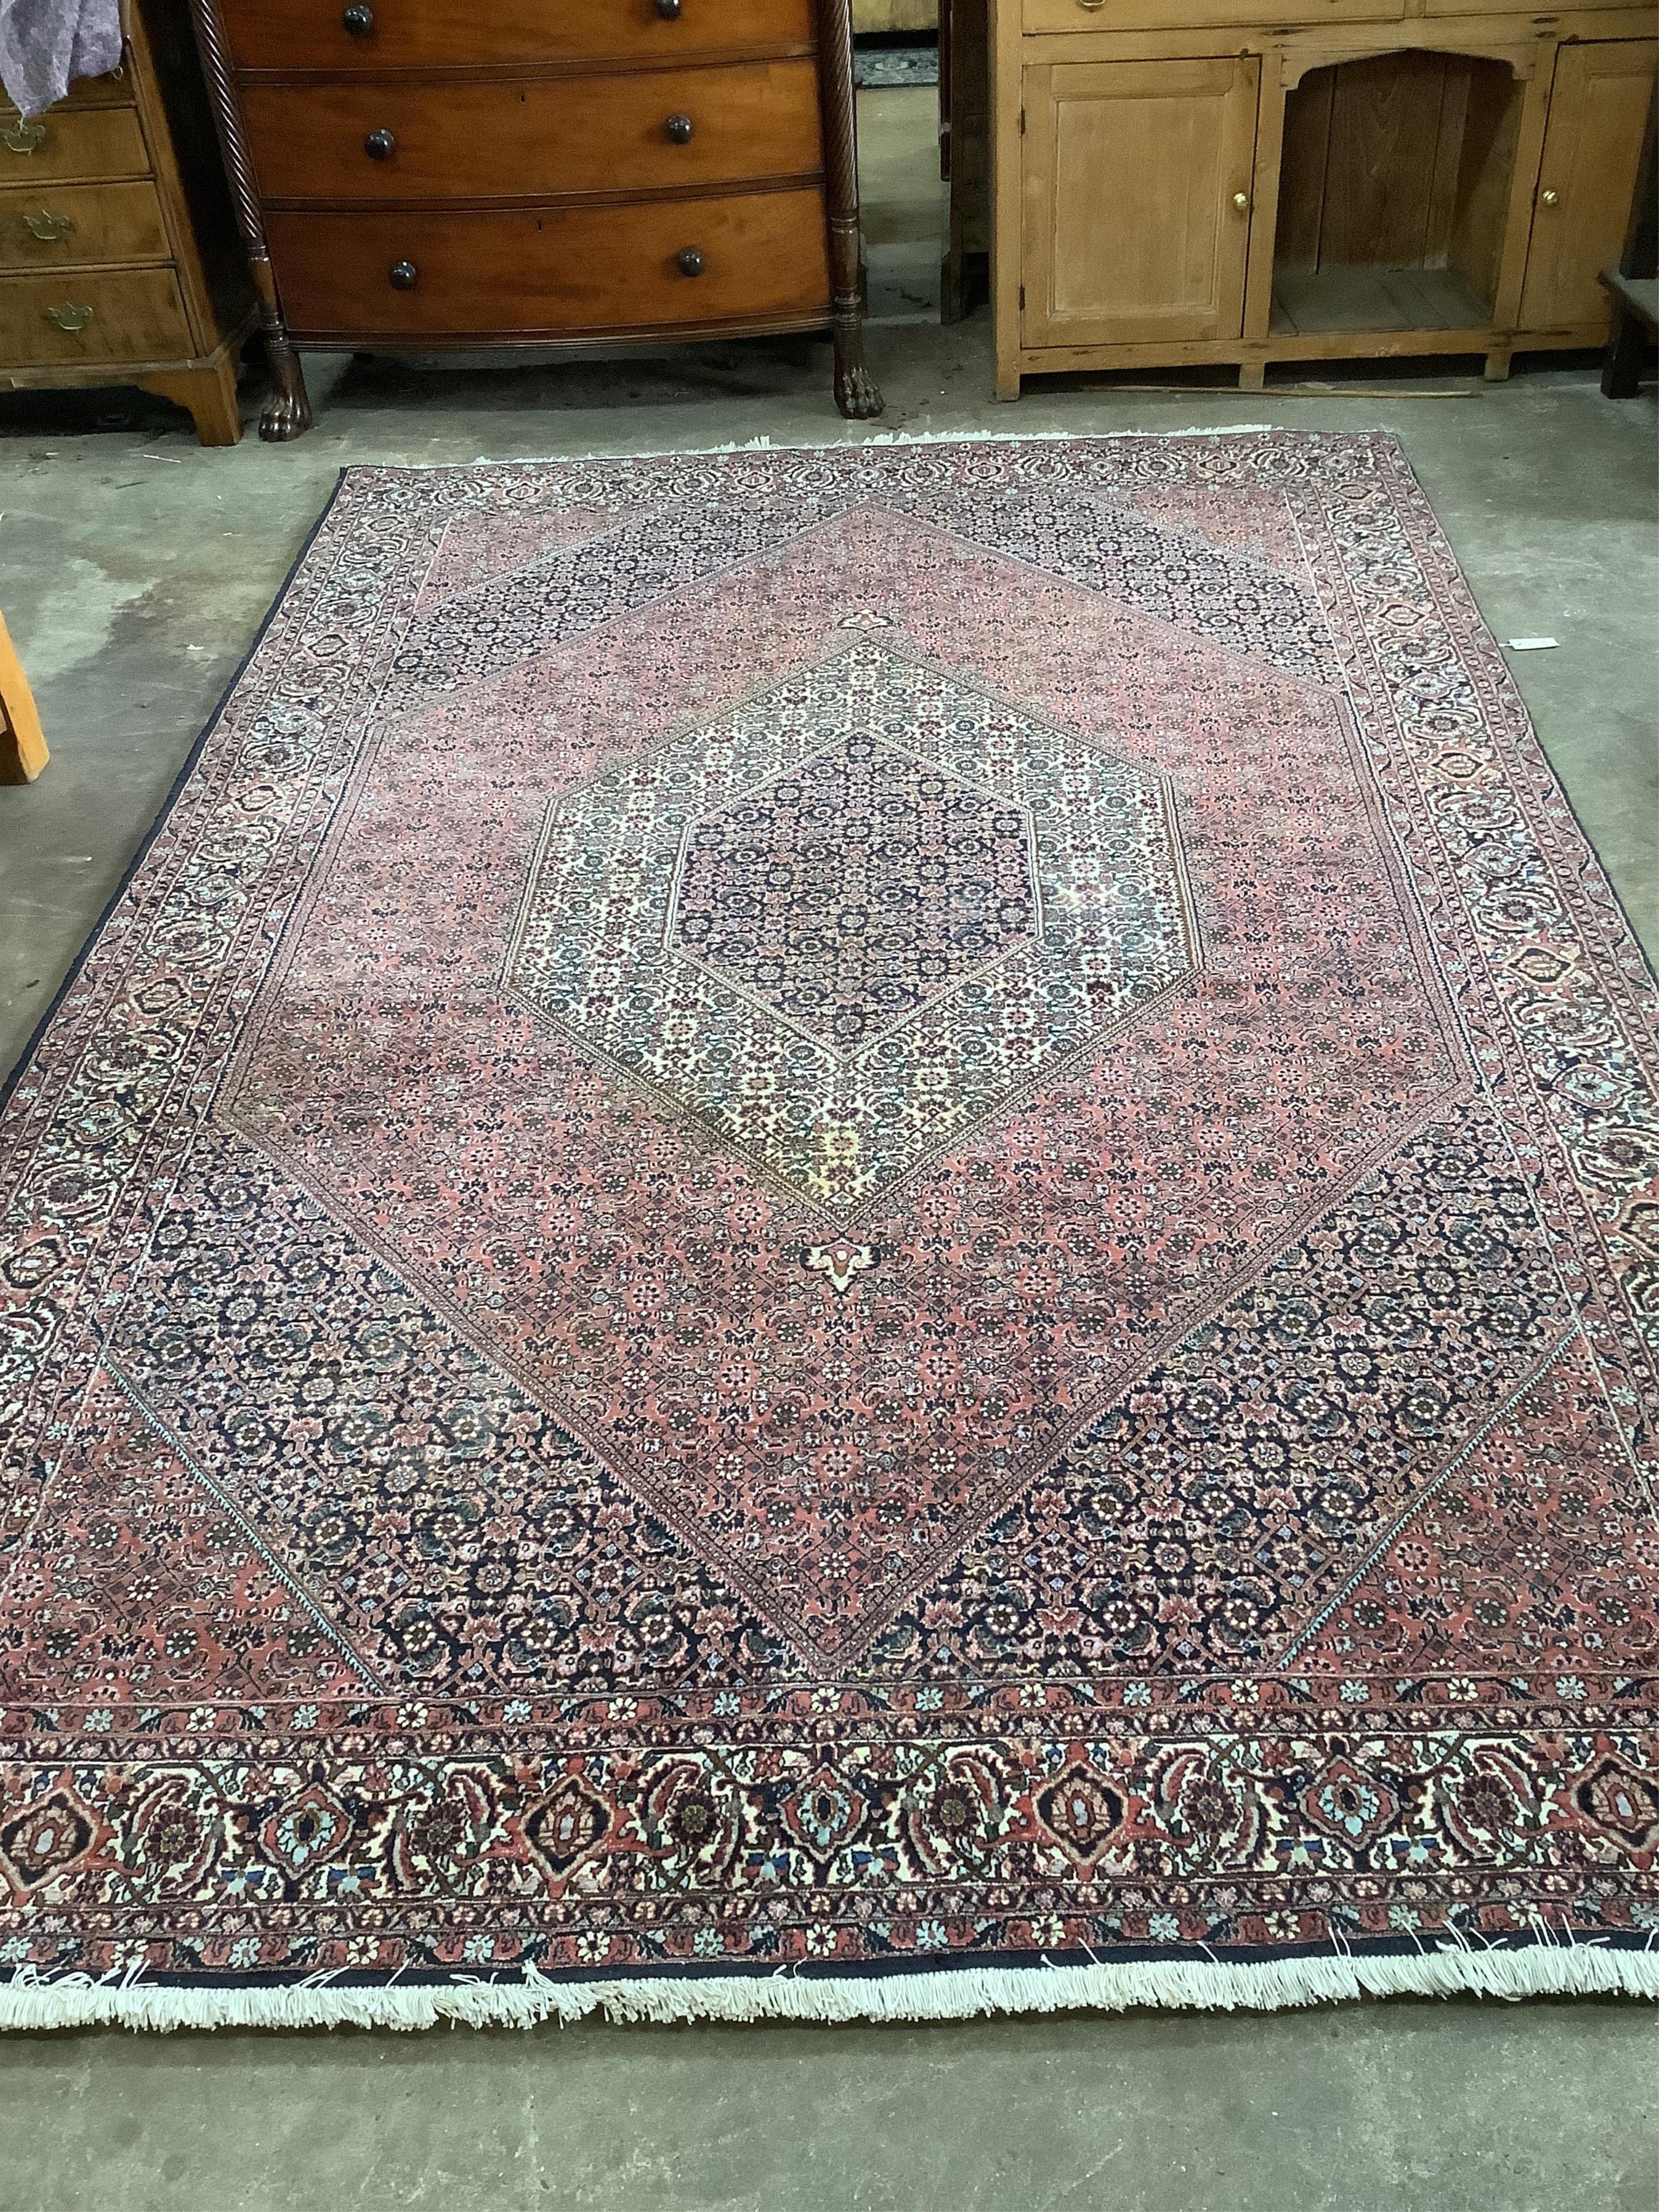 A North West Persian blue ground carpet, 300 x 200cm